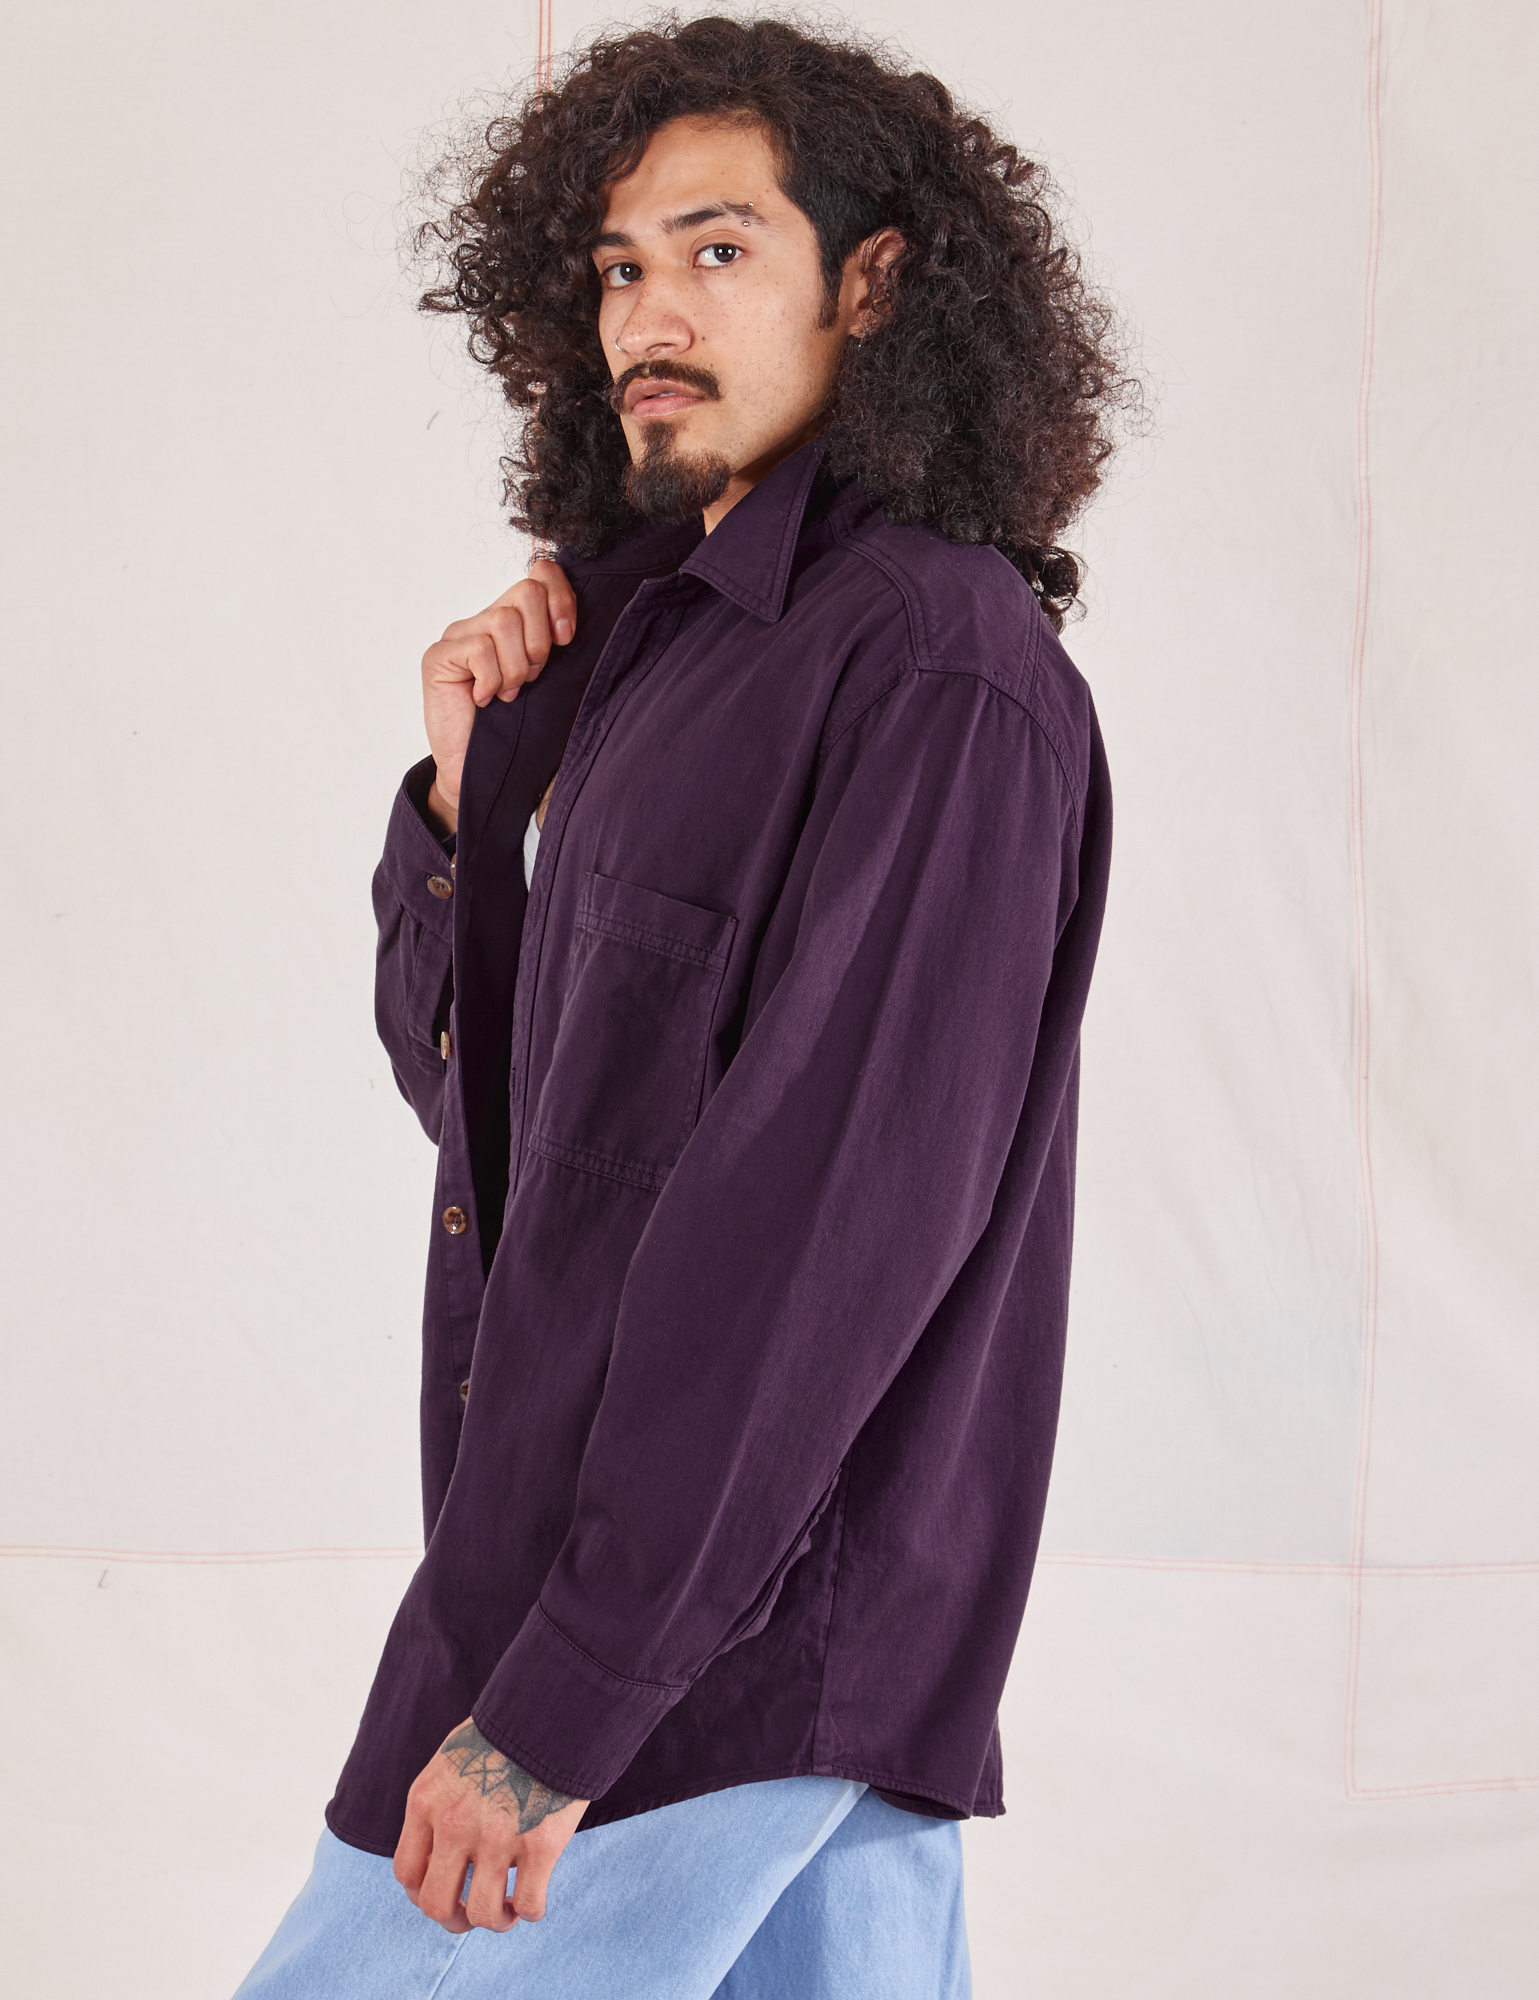 Oversize Overshirt in Nebula Purple side view on Jesse